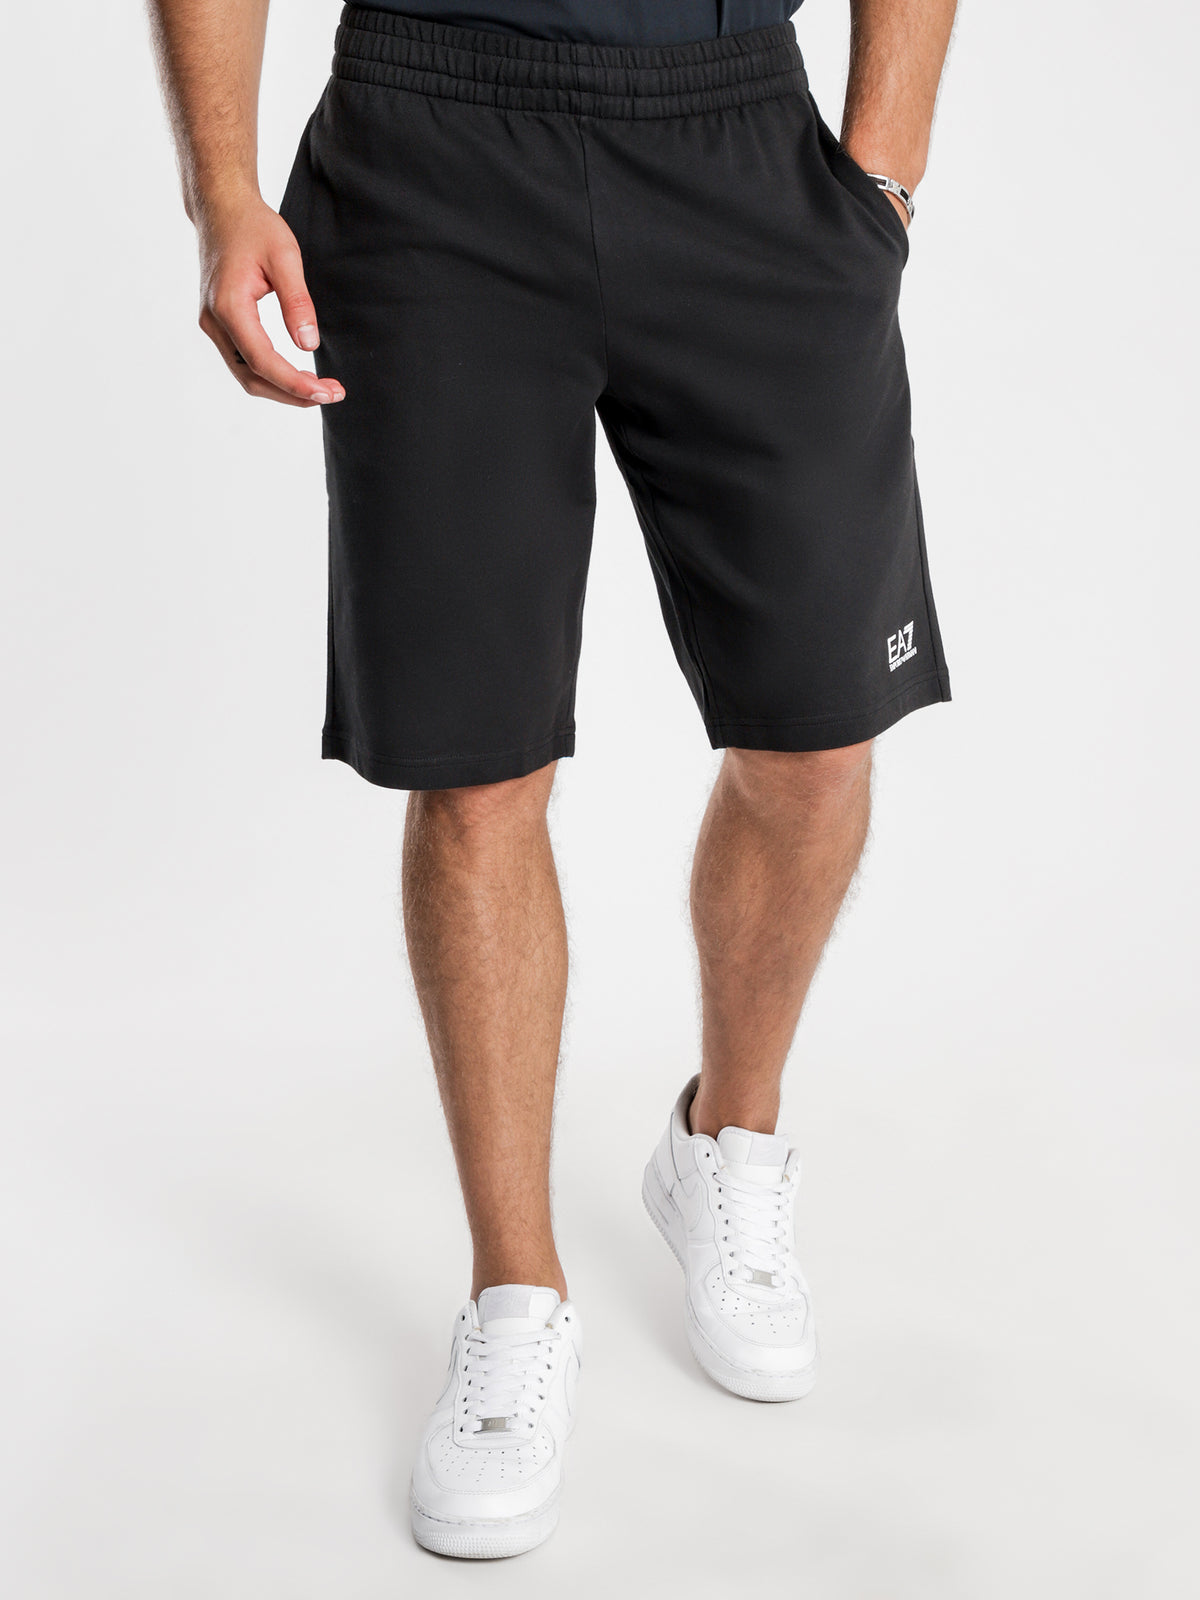 Sweat Bermuda Shorts in Black